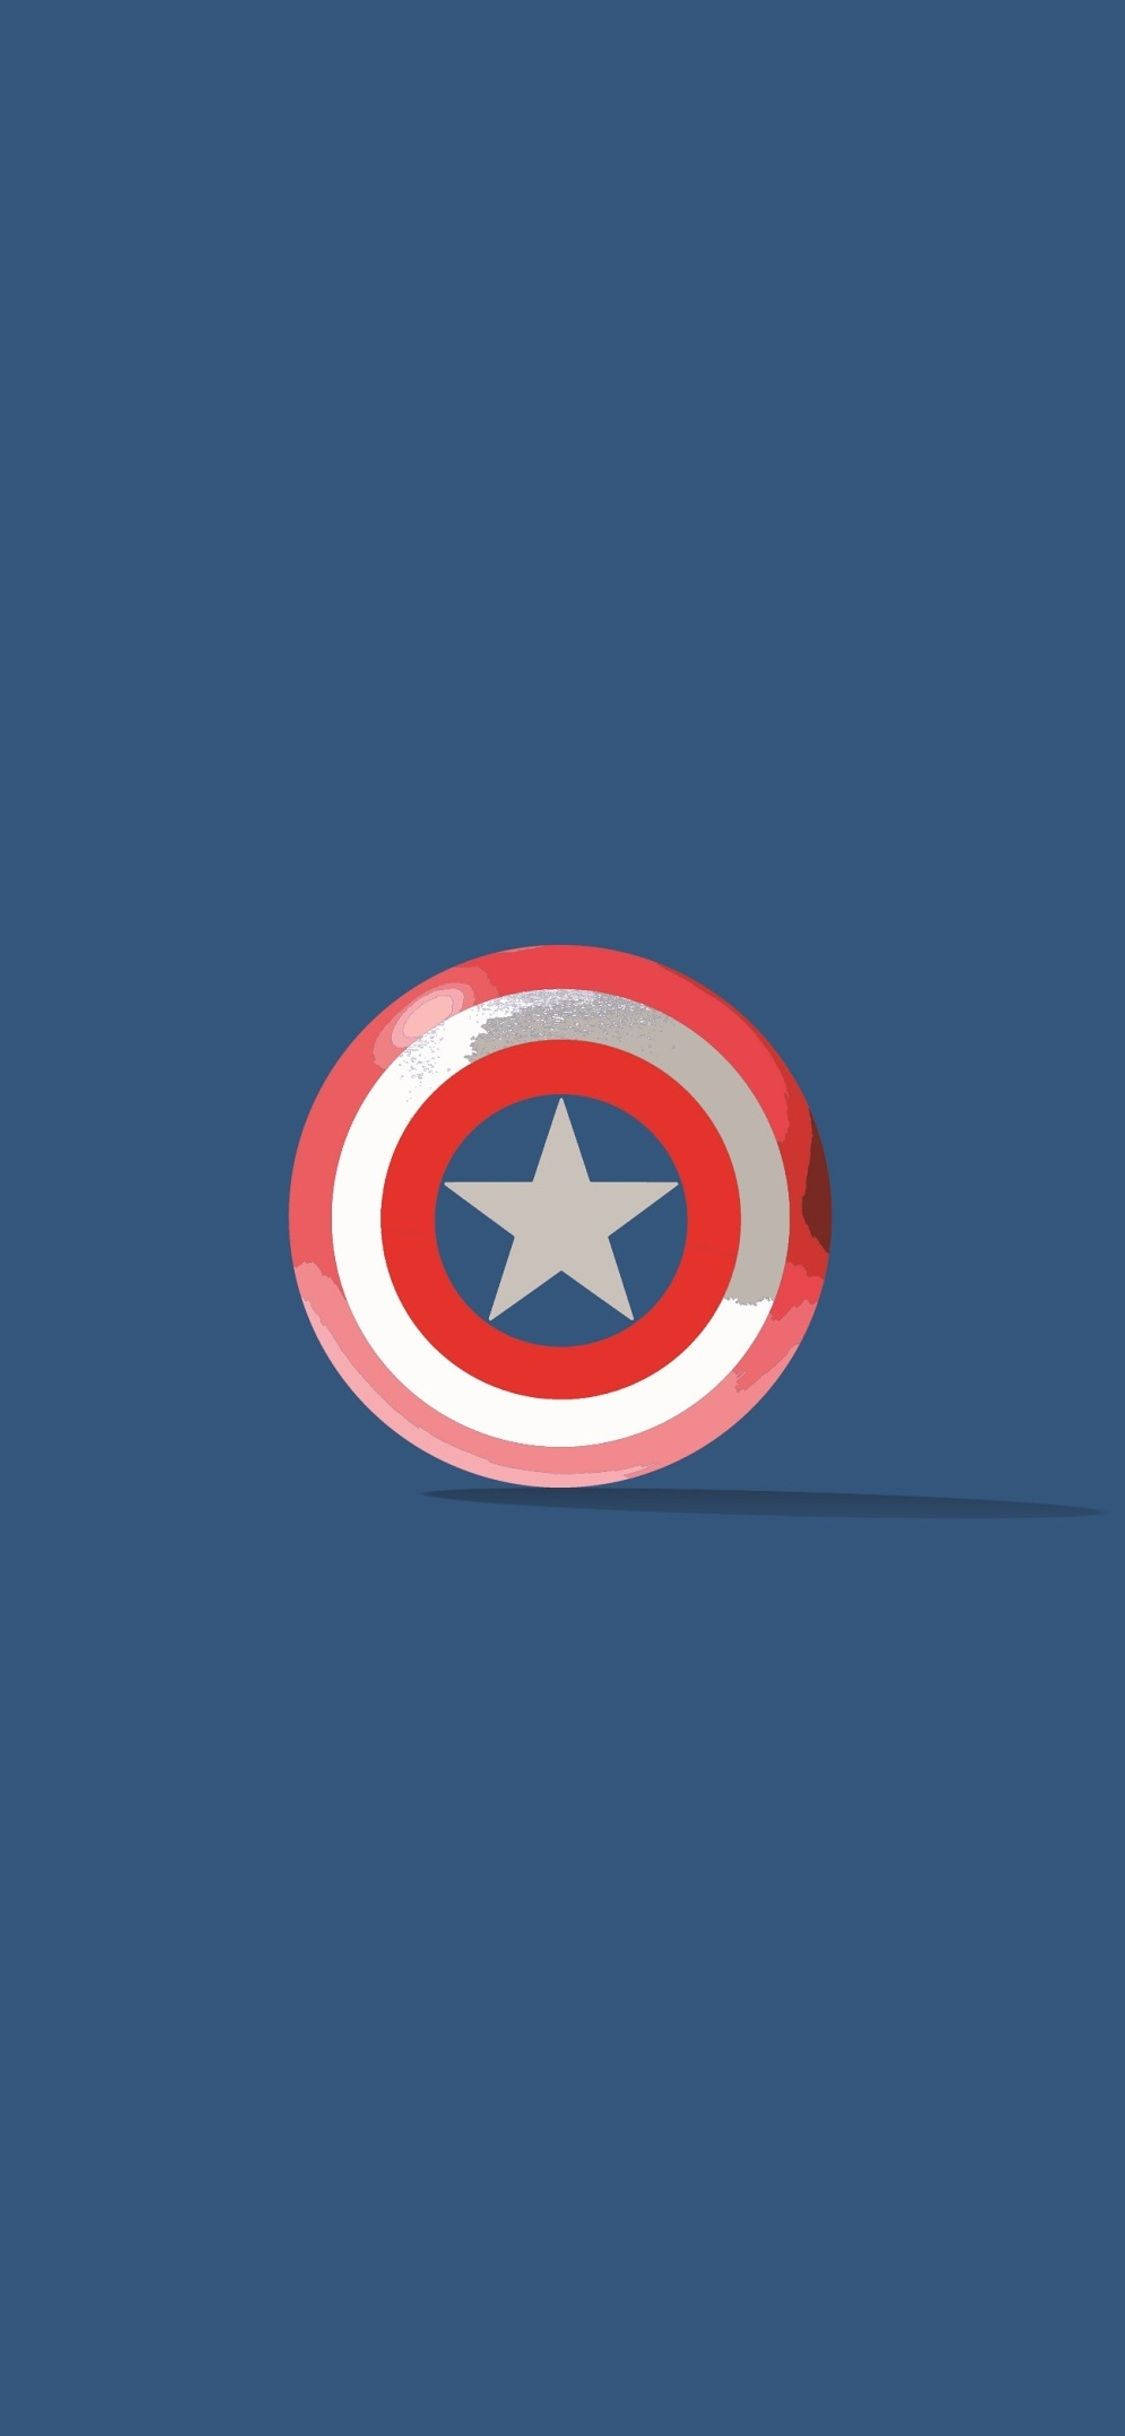 Captain America Shield Iphone Minimalist Blue Aesthetic Wallpaper